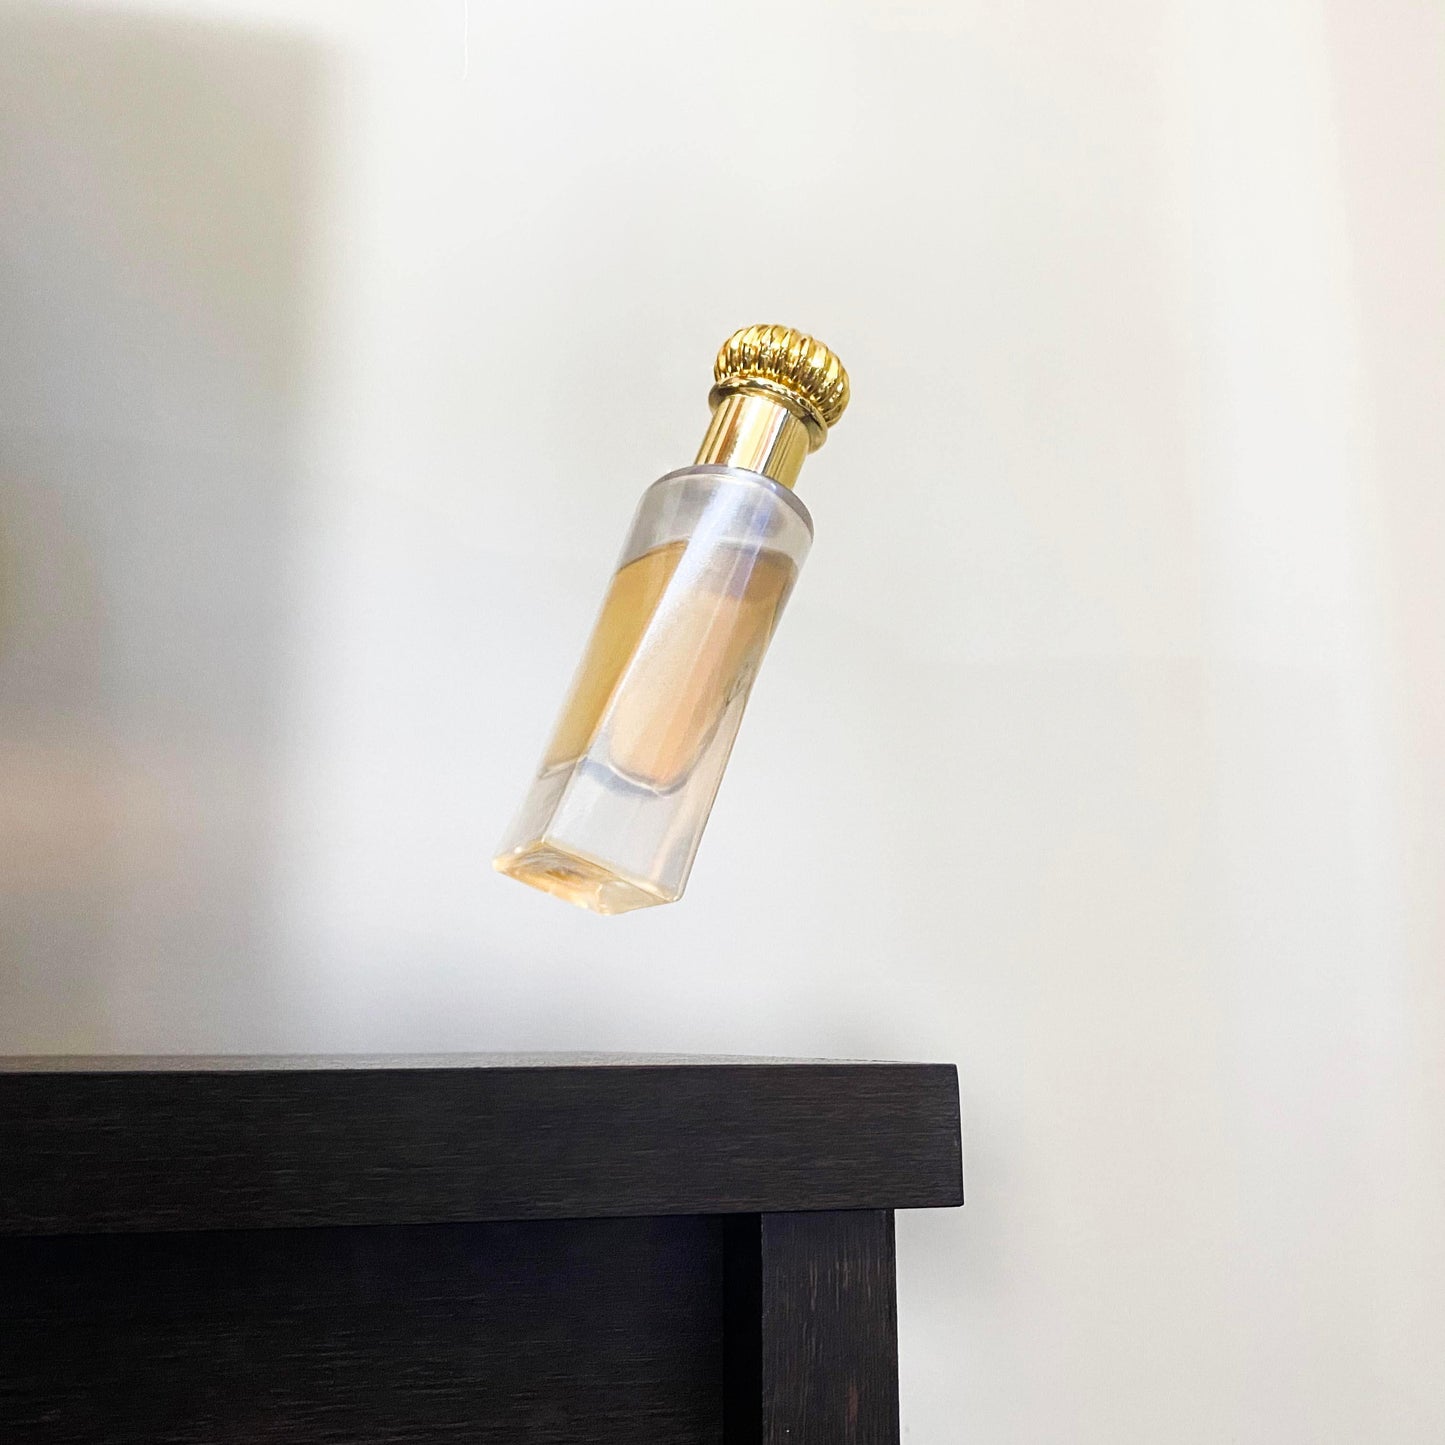 Amani | أماني Women's Arabian Perfume 90ml - HSA Perfumes